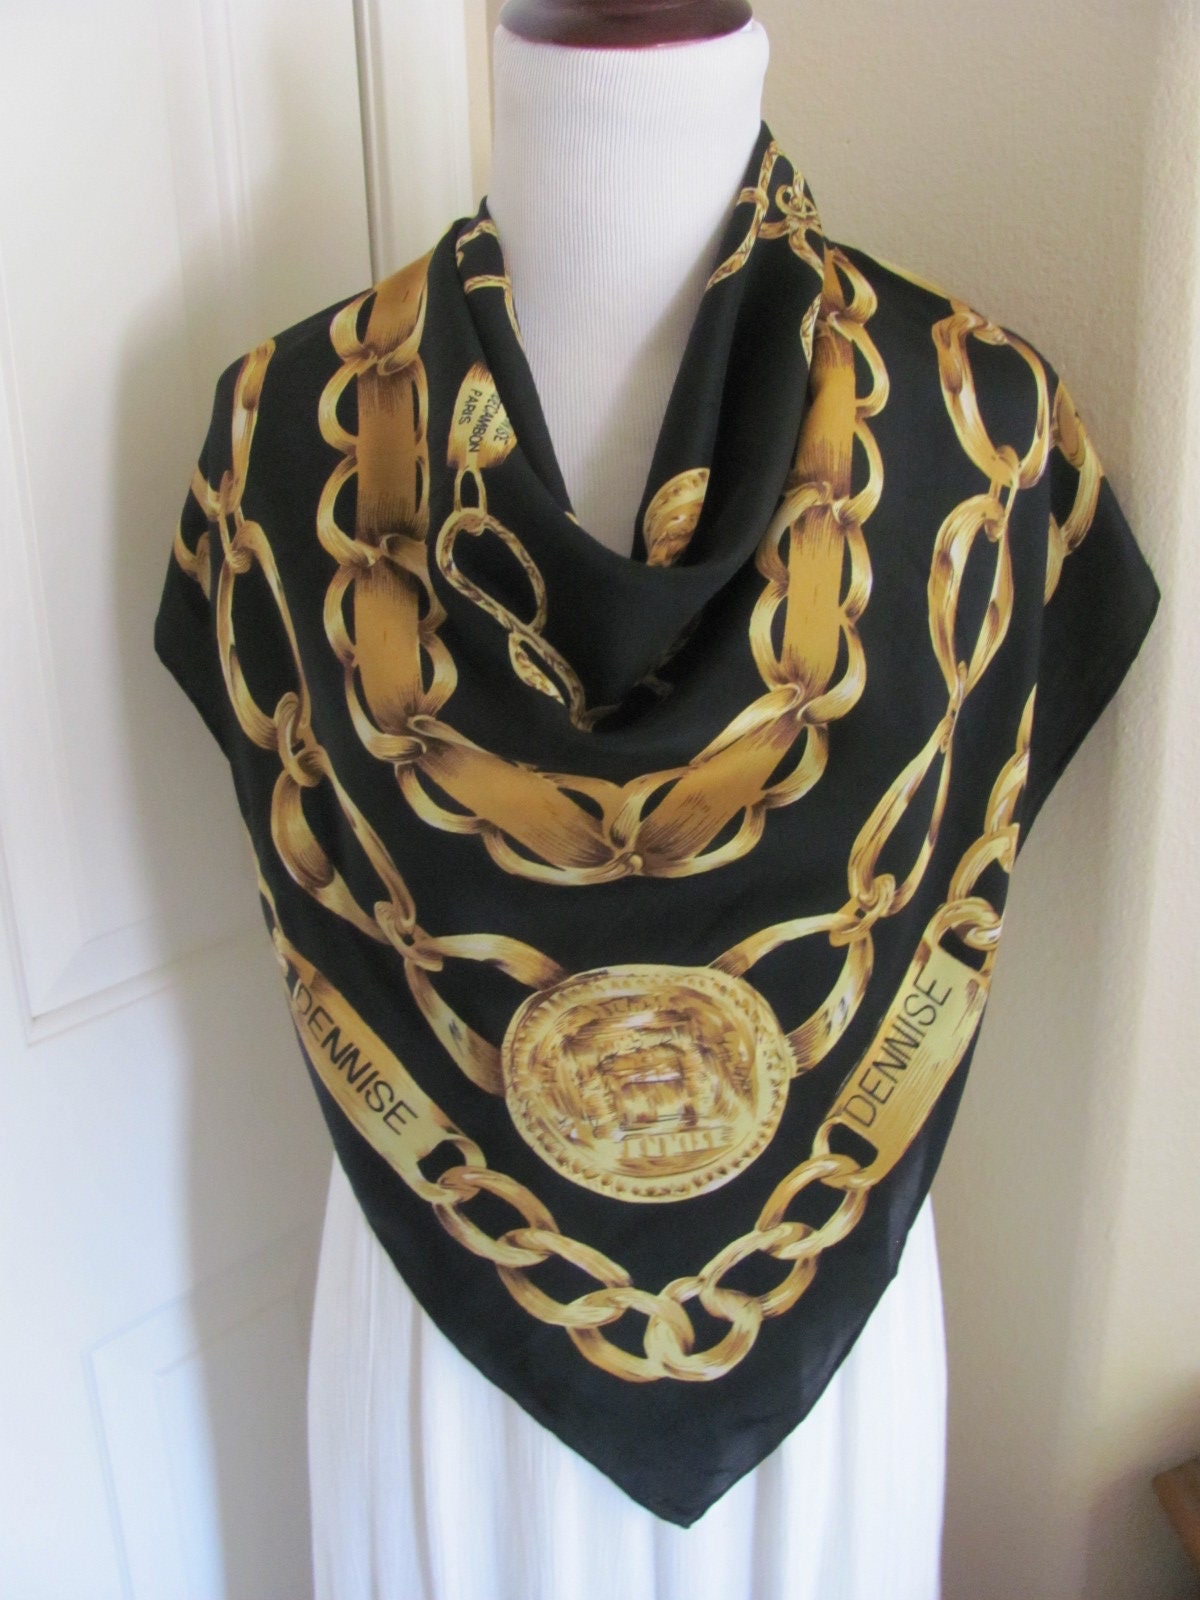 denim vest with black bandana neckerchief, Chanel butterfly